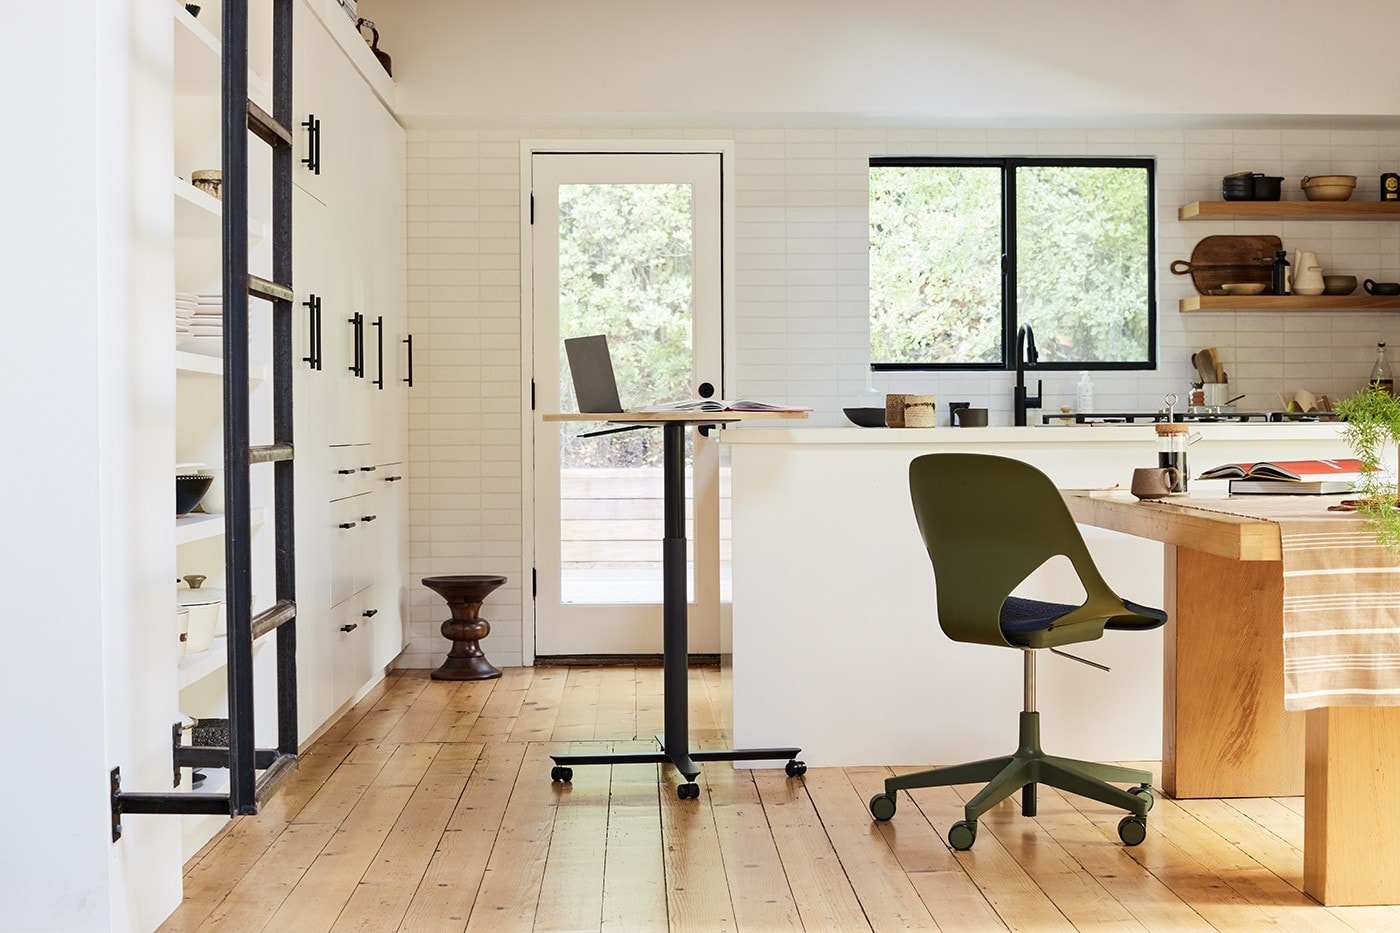 Herman Miller 推出全新可調節高度獨立工作桌「Passport Work Table」